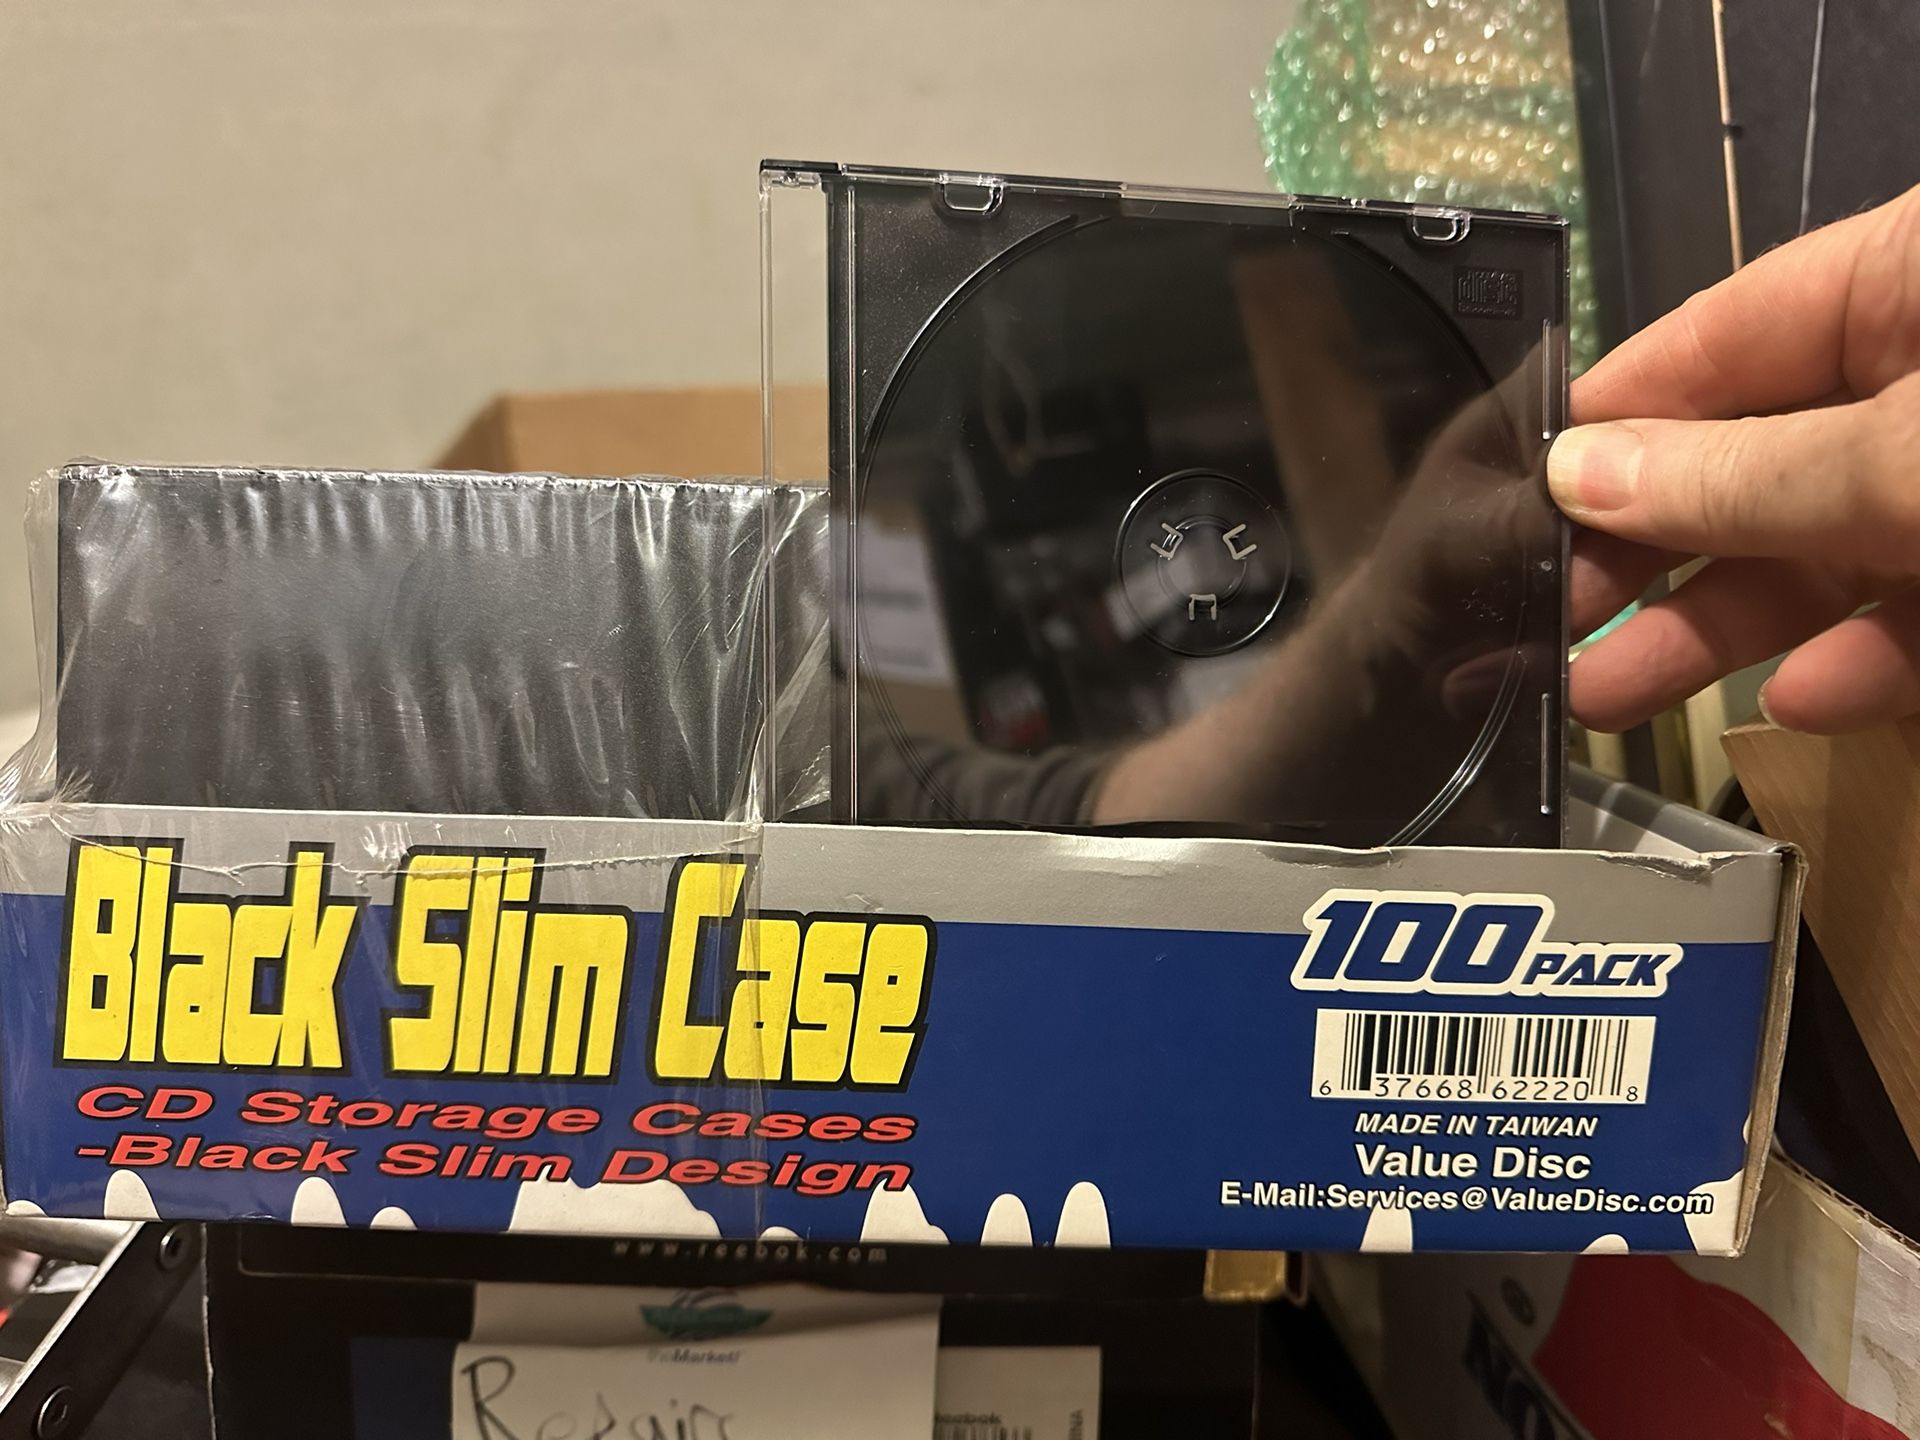 CD/DVD Storage Cases